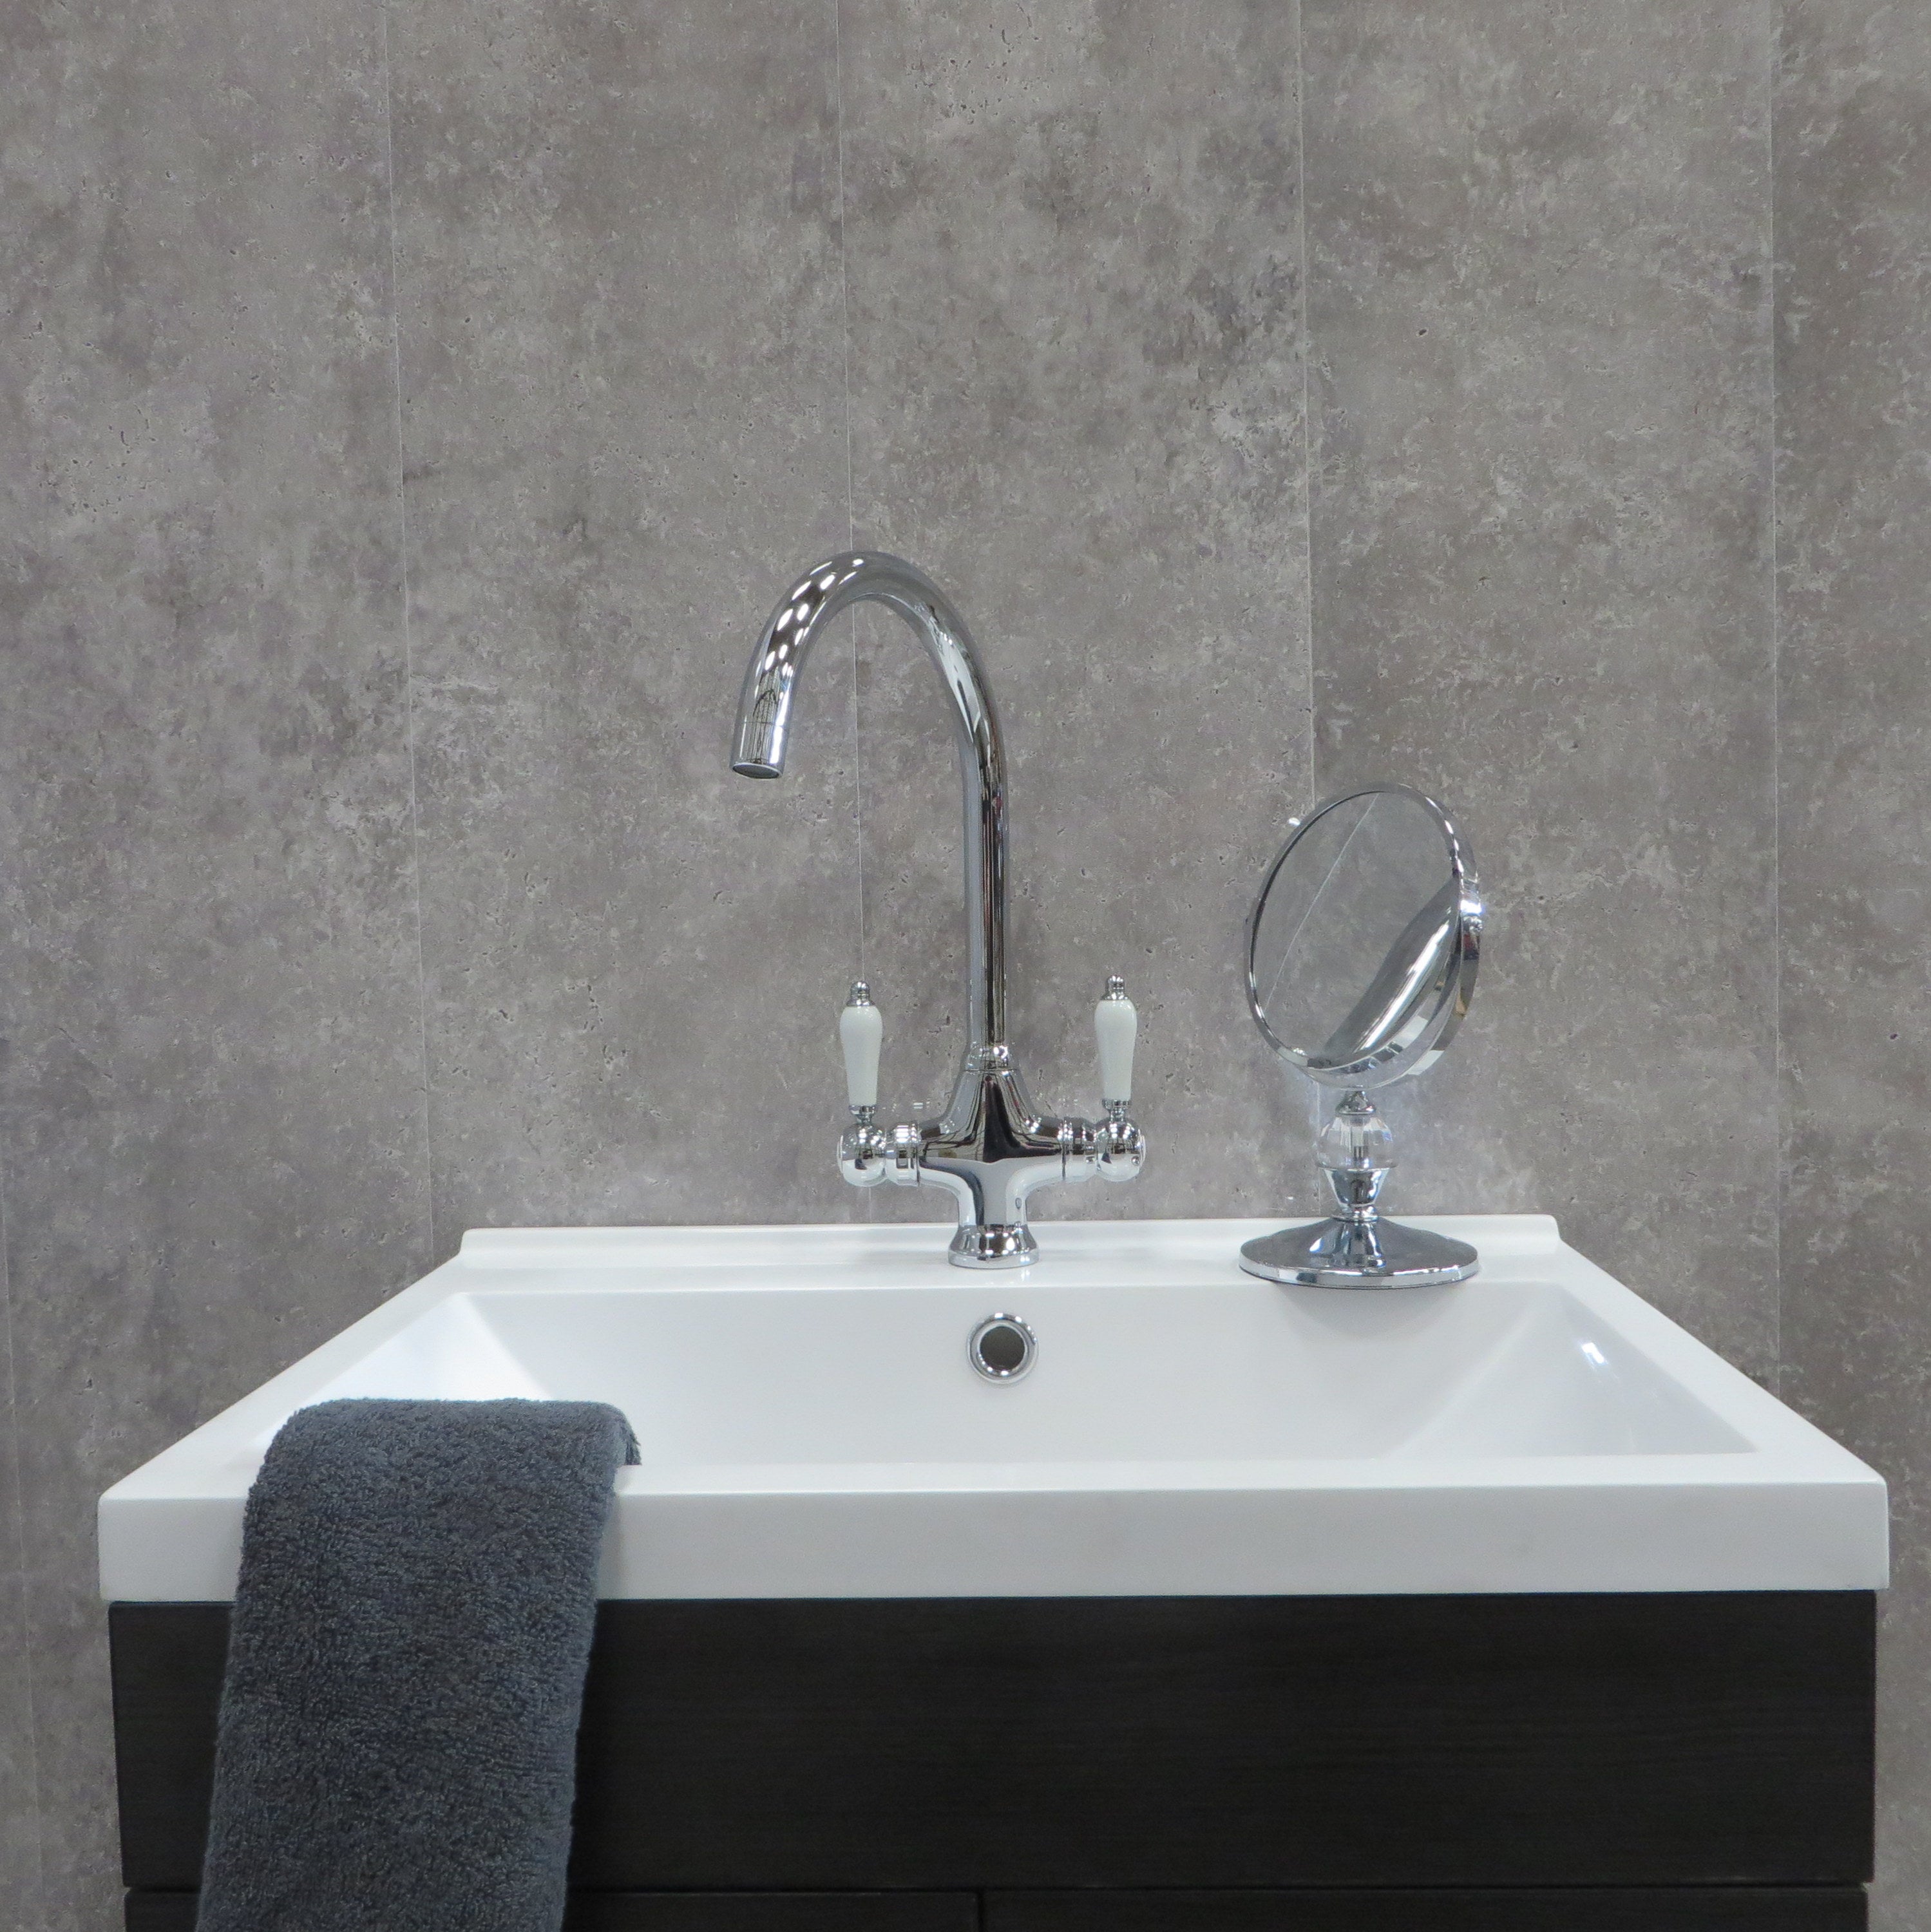 Sample of Concrete Grey 5mm Bathroom Cladding PVC Wall Panels